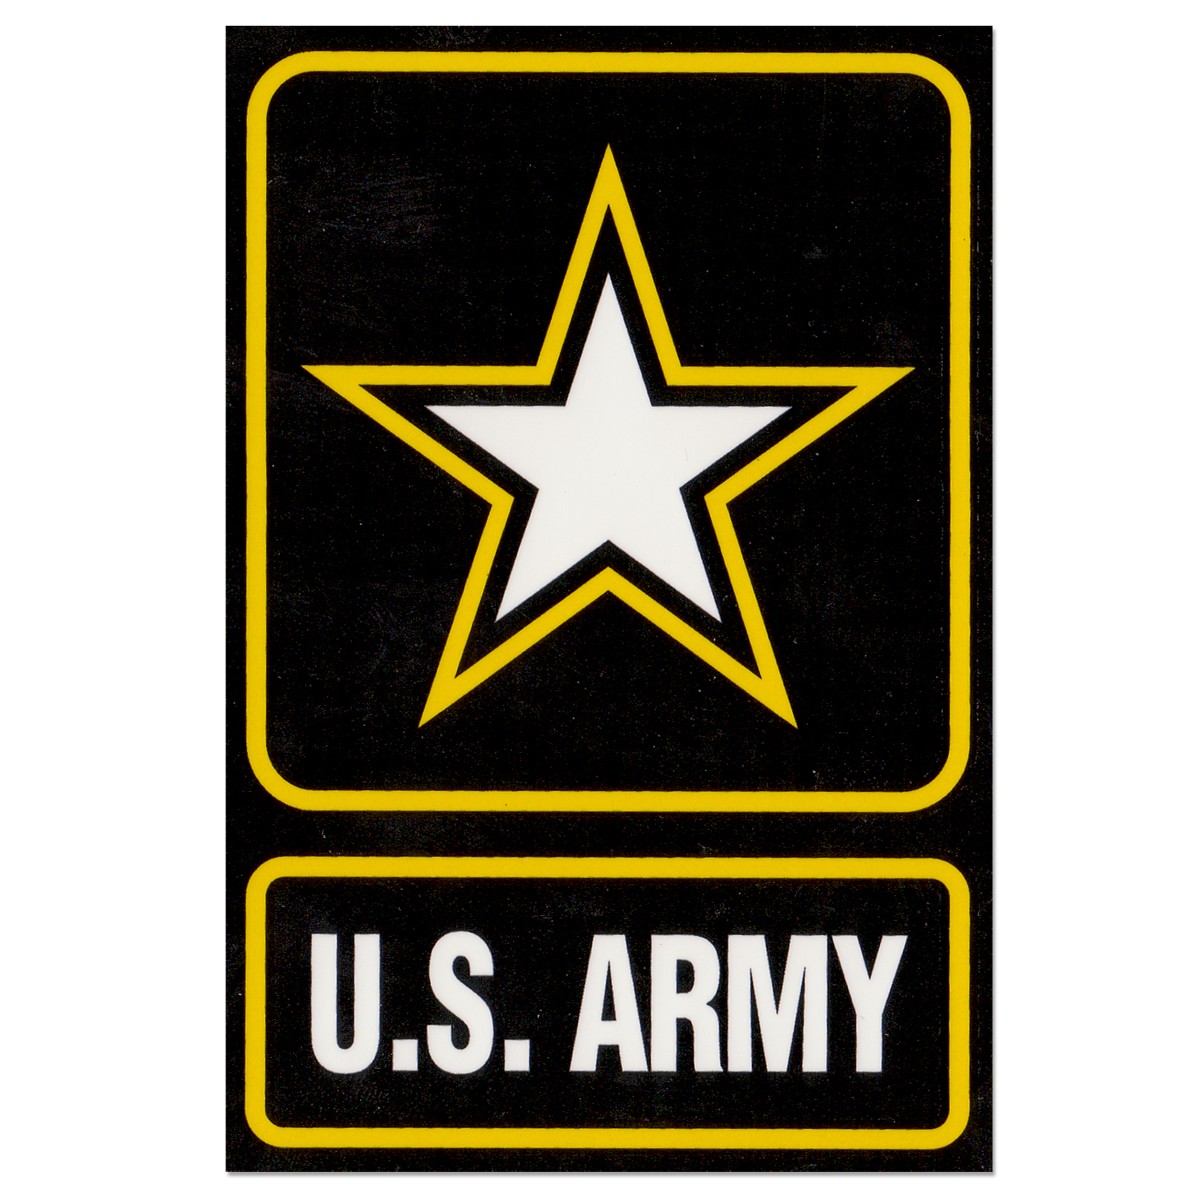 Army Logo Clip Art   Clipart Best